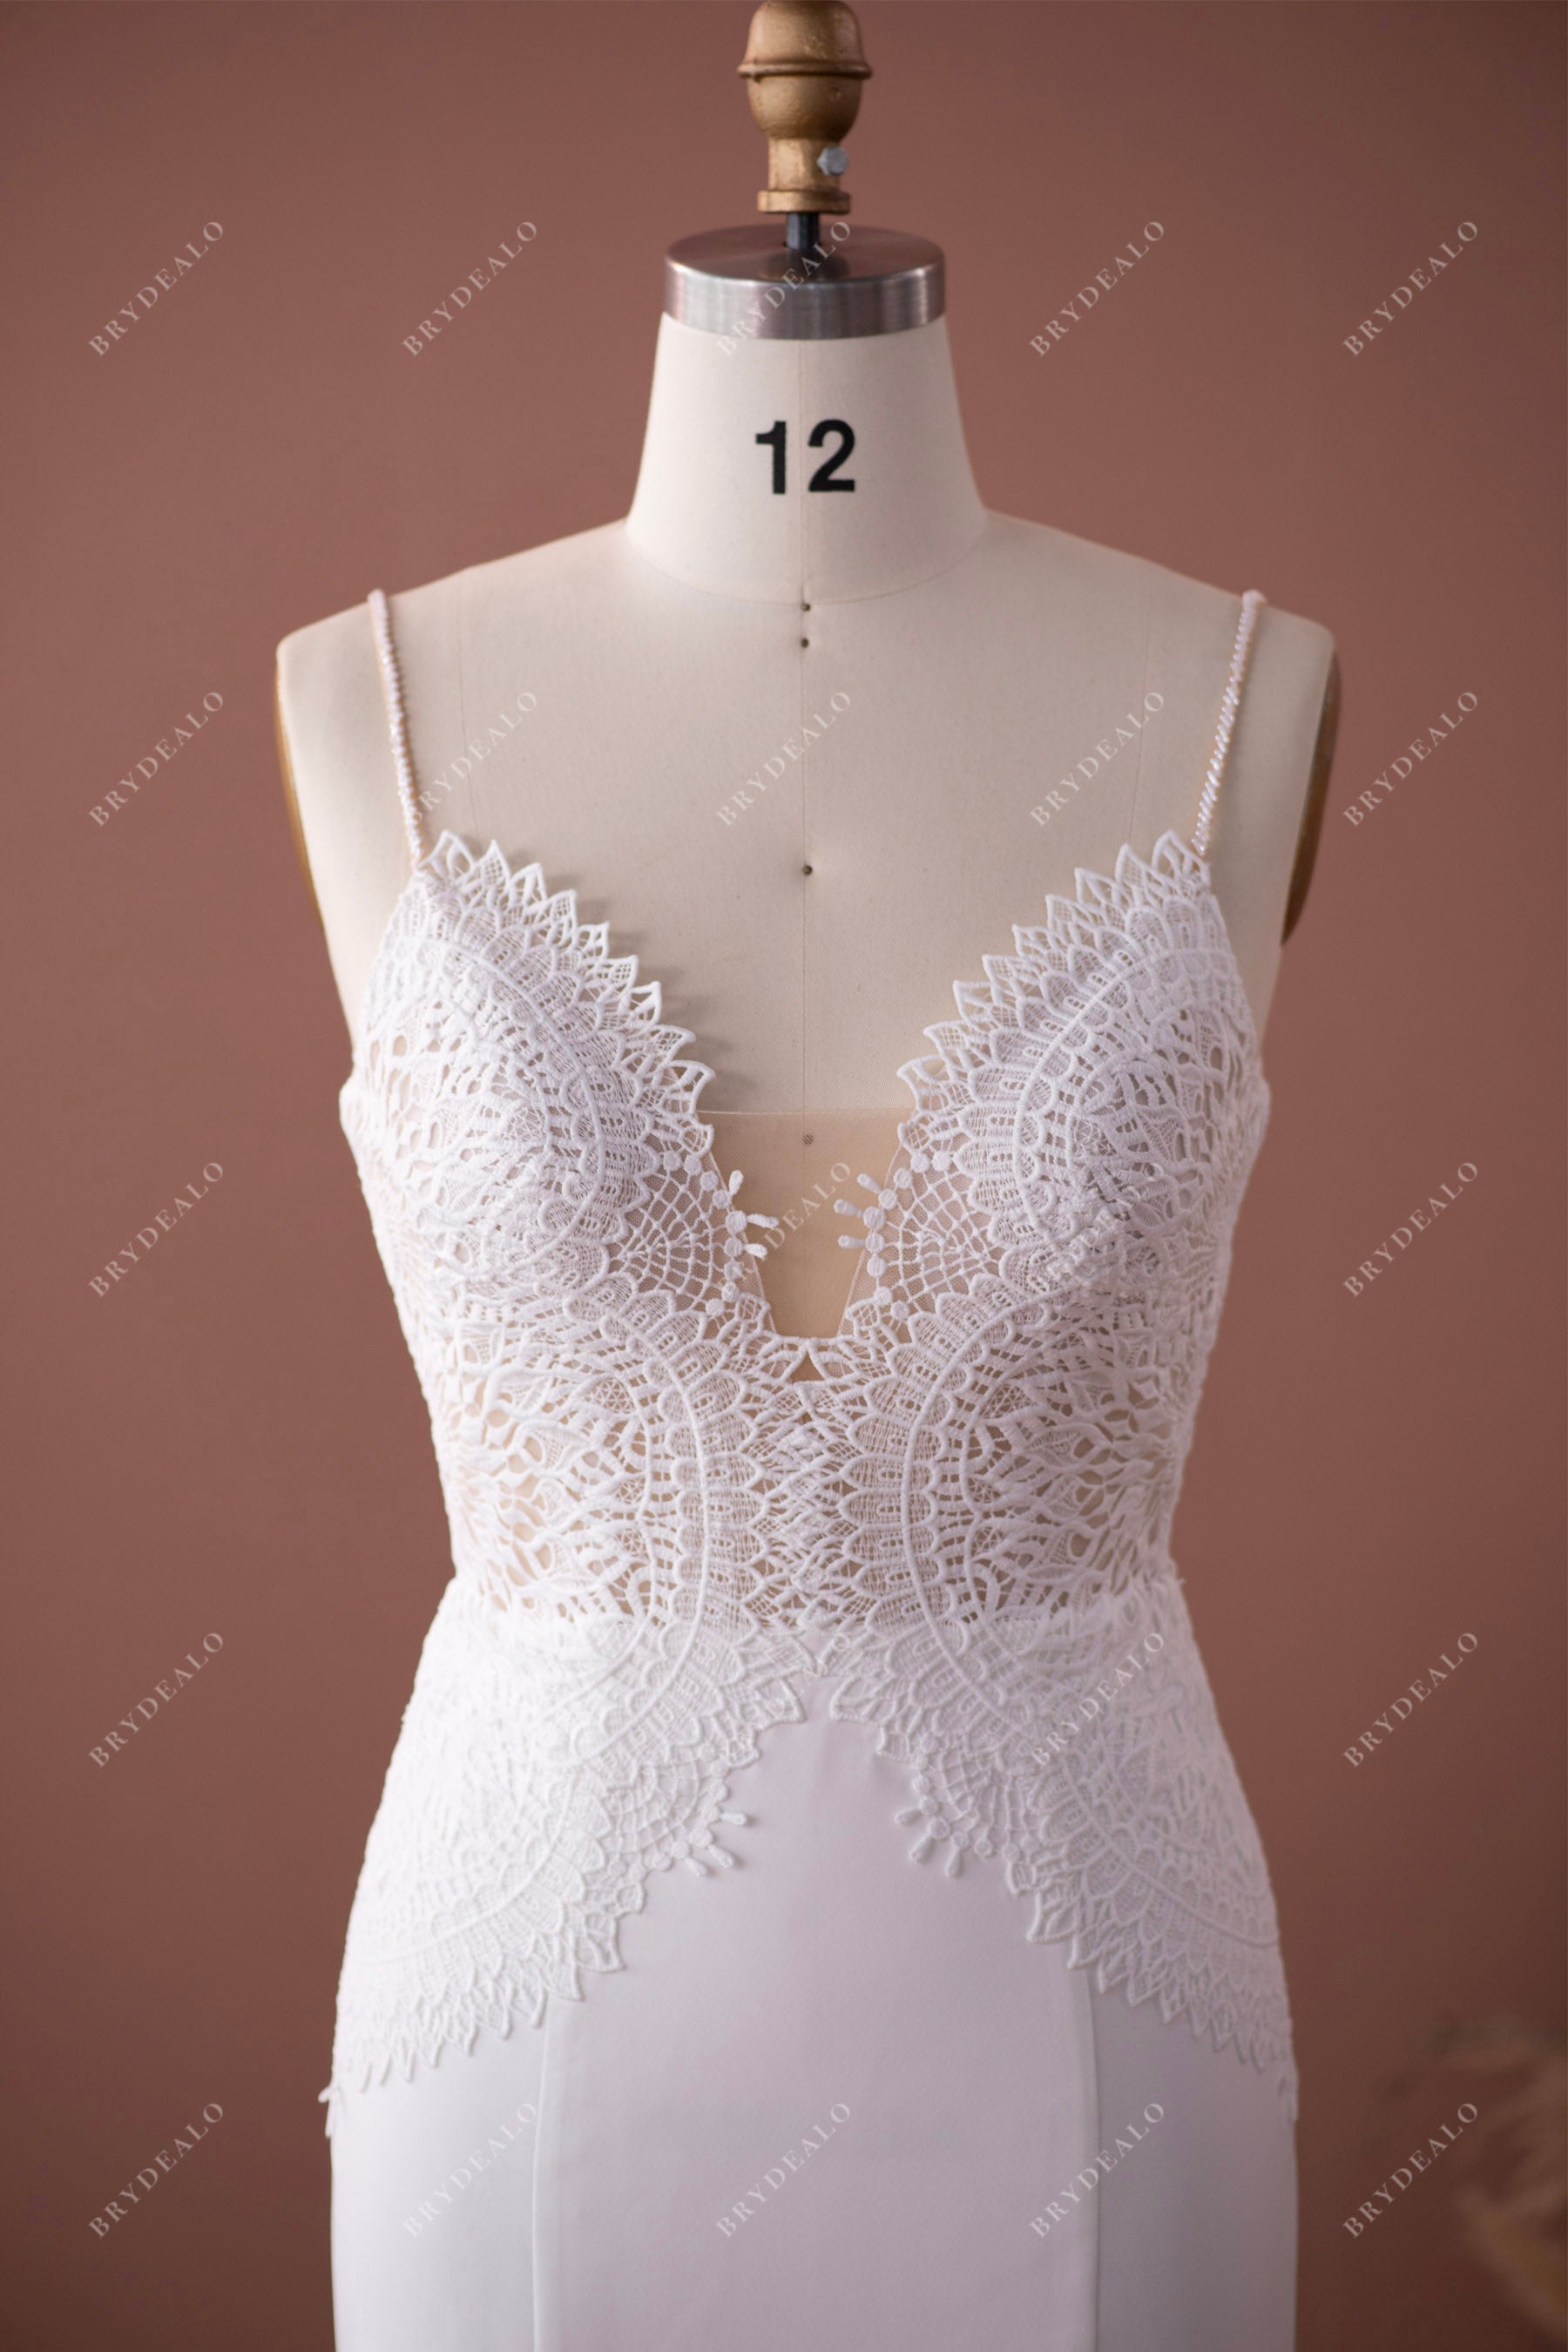 scalloped neck lace wedding dress